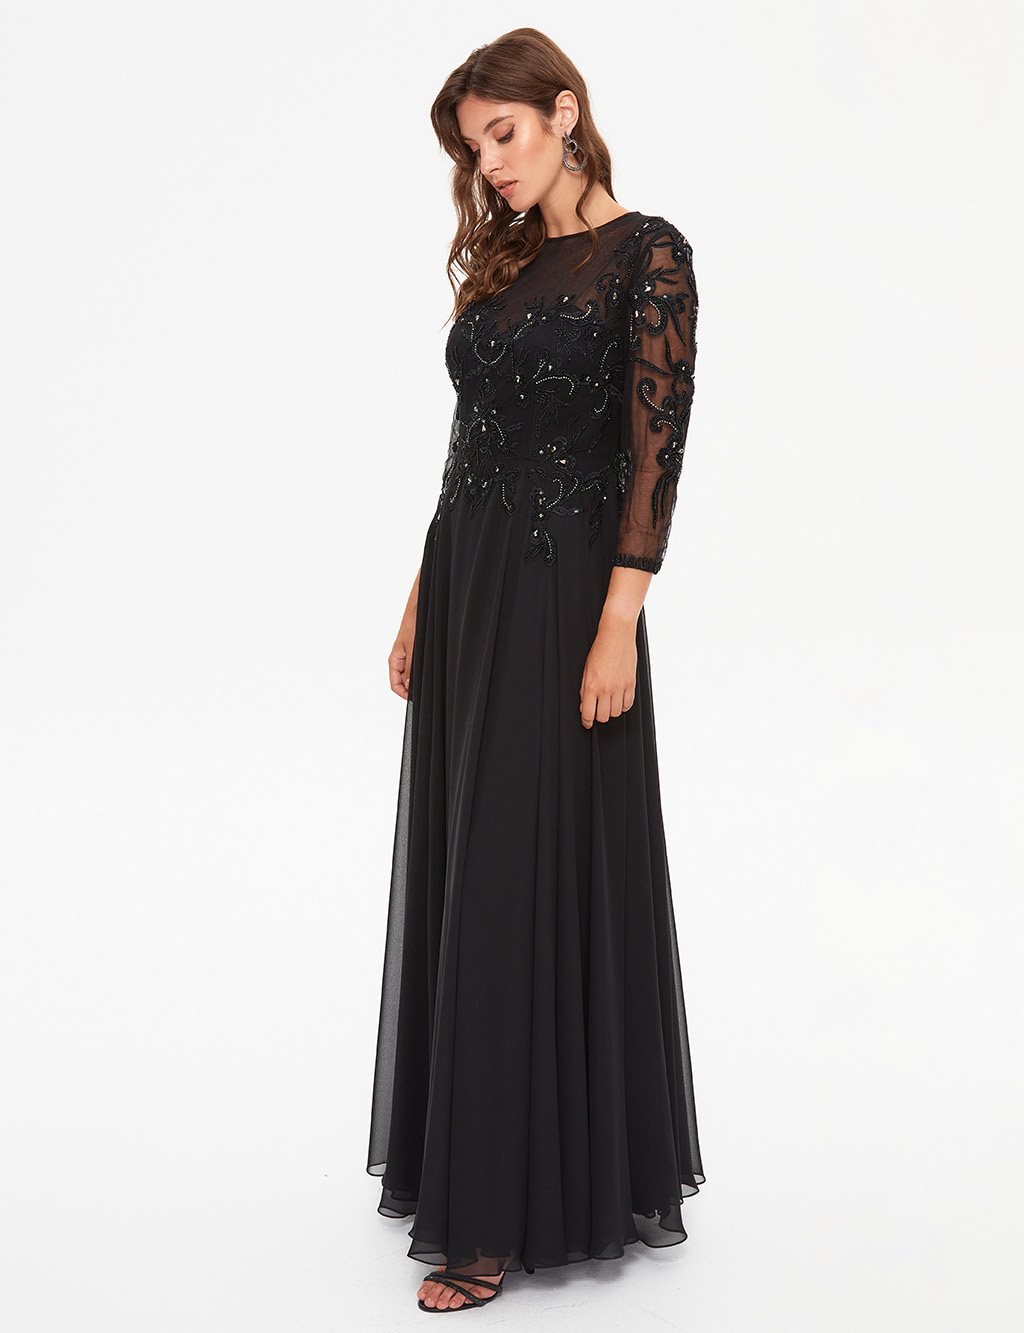 TIARA Embroidered Illusion Collar Evening Dress Black